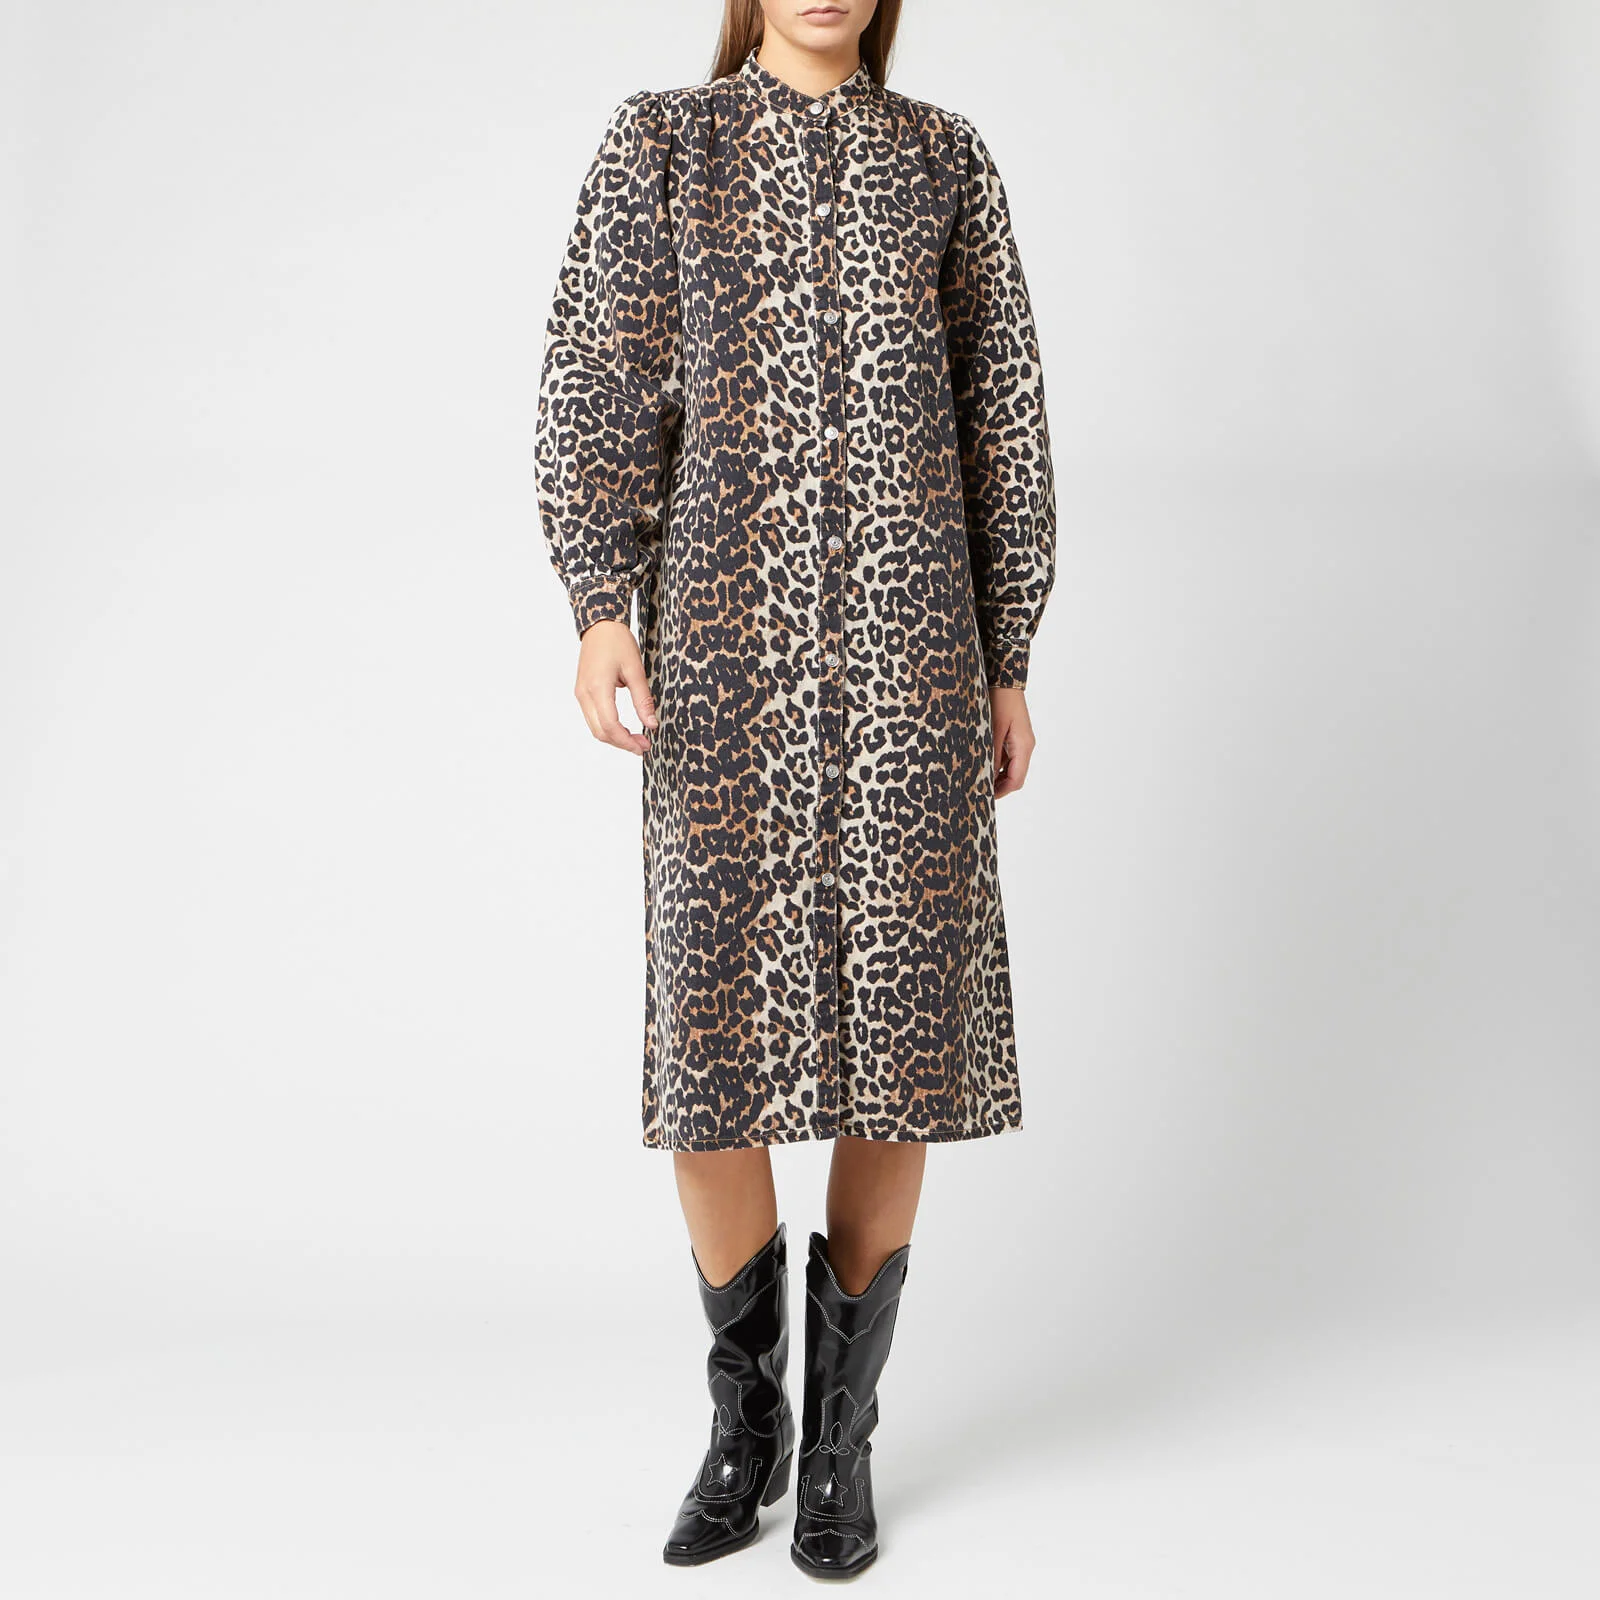 Ganni Women's Printed Shirt Dress - Leopard Image 1